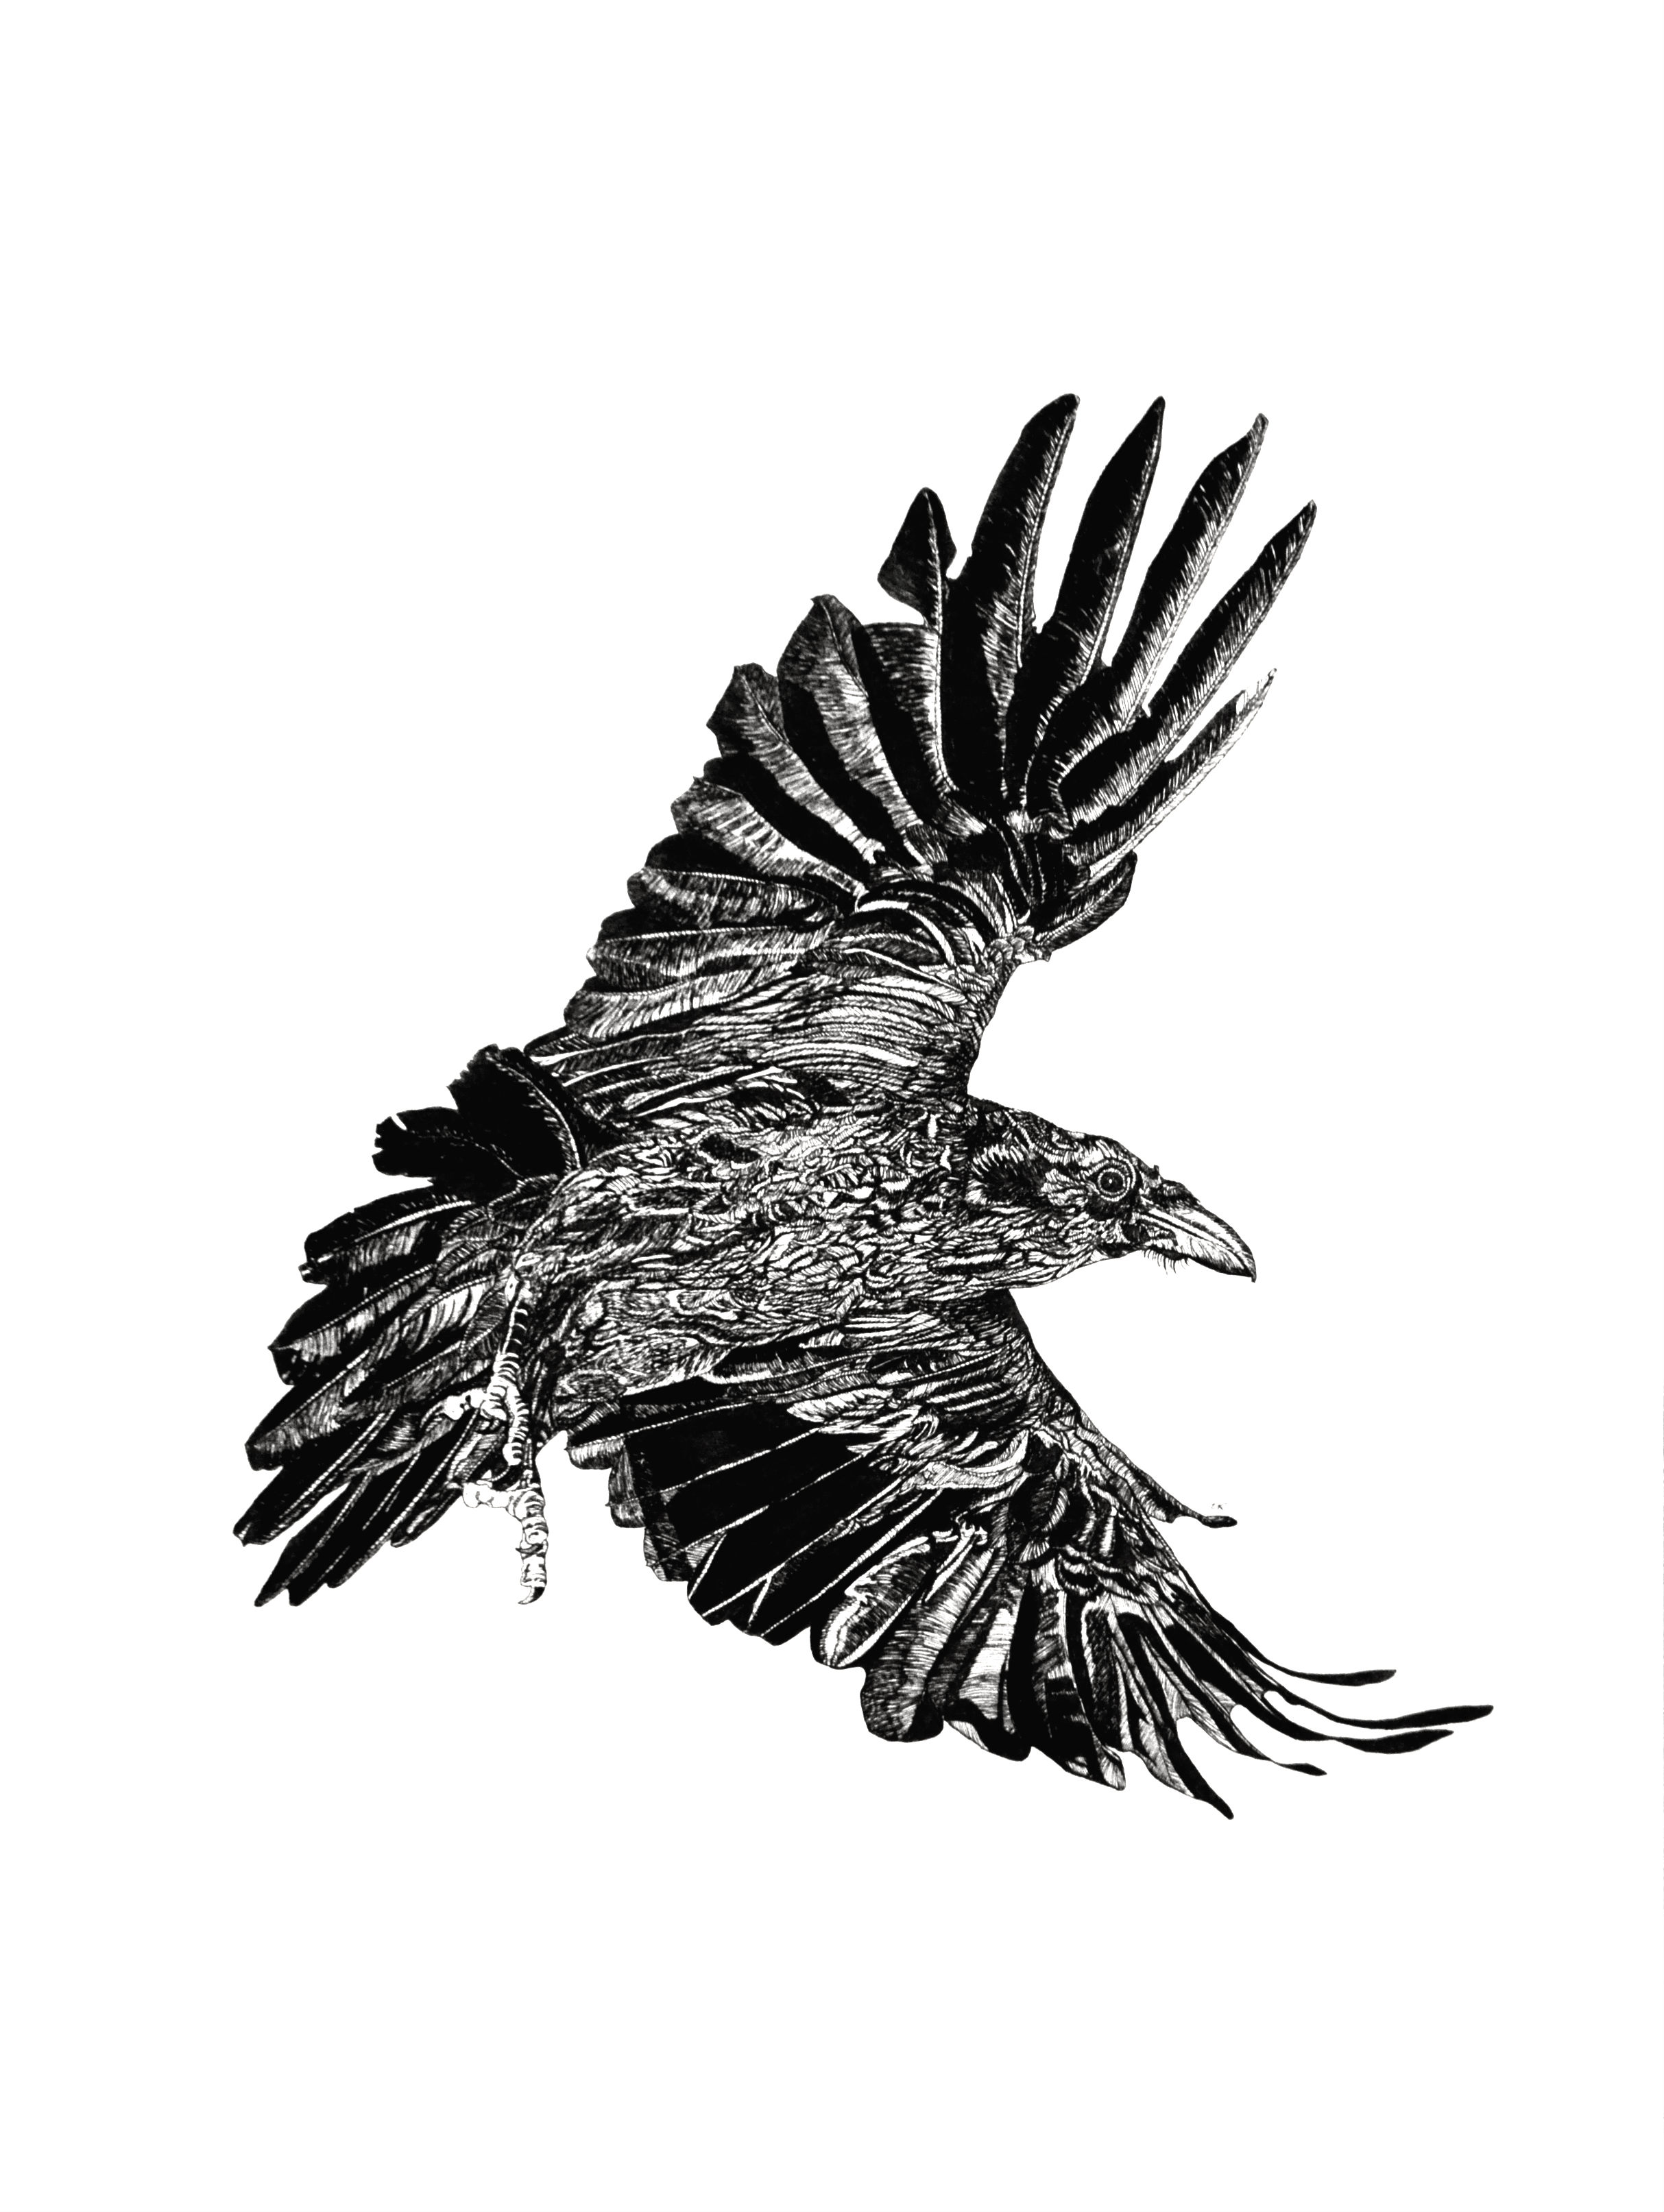   Raven III    24 x 18    ink on paper  